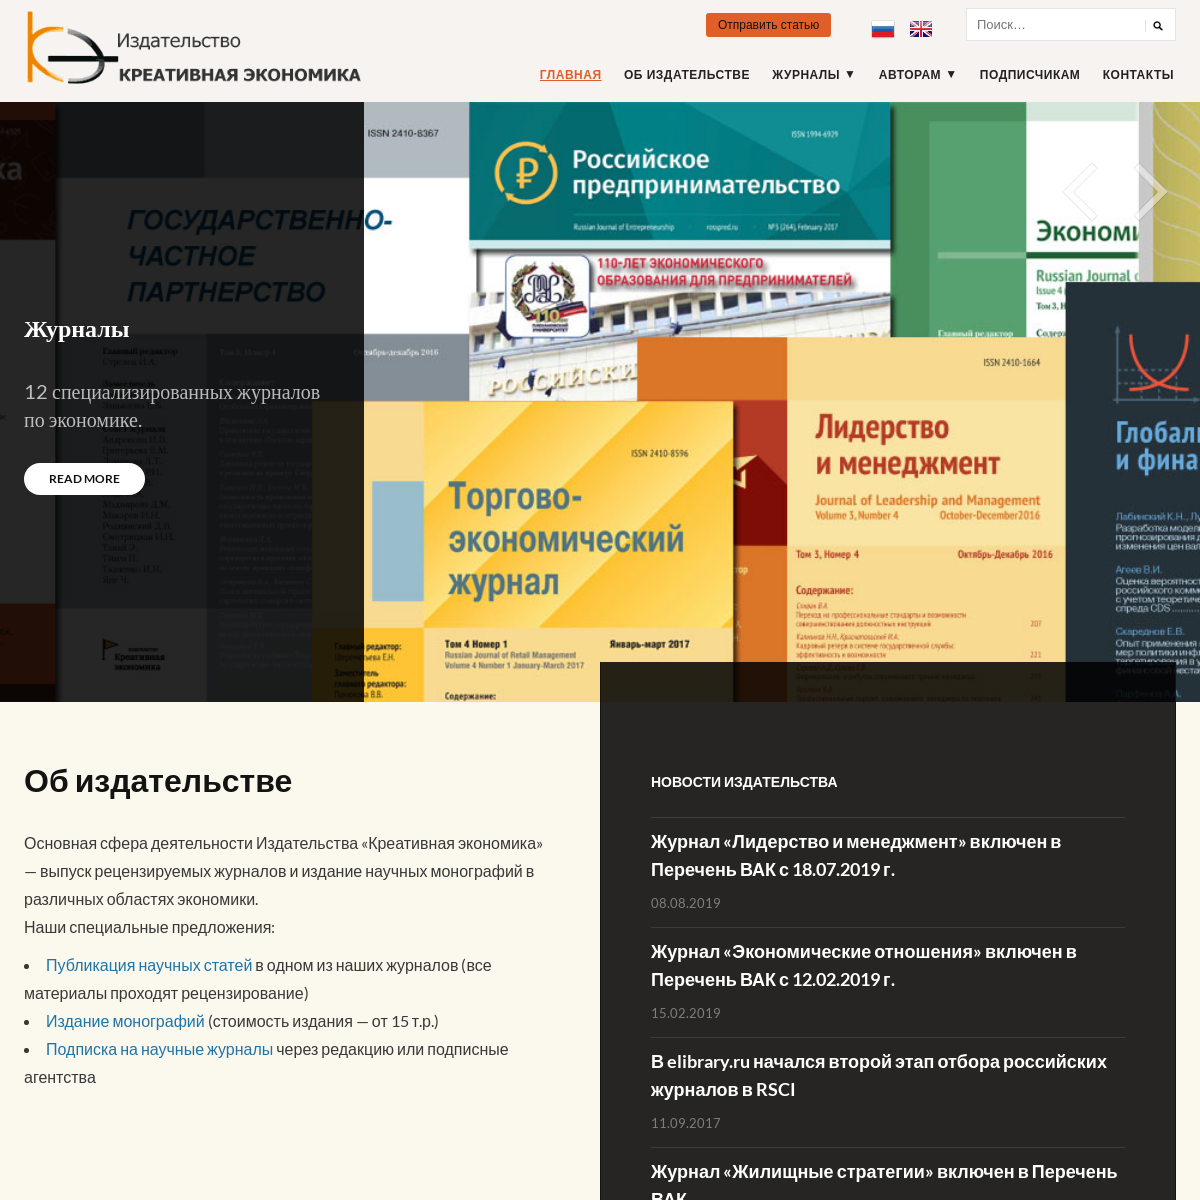 A complete backup of creativeconomy.ru